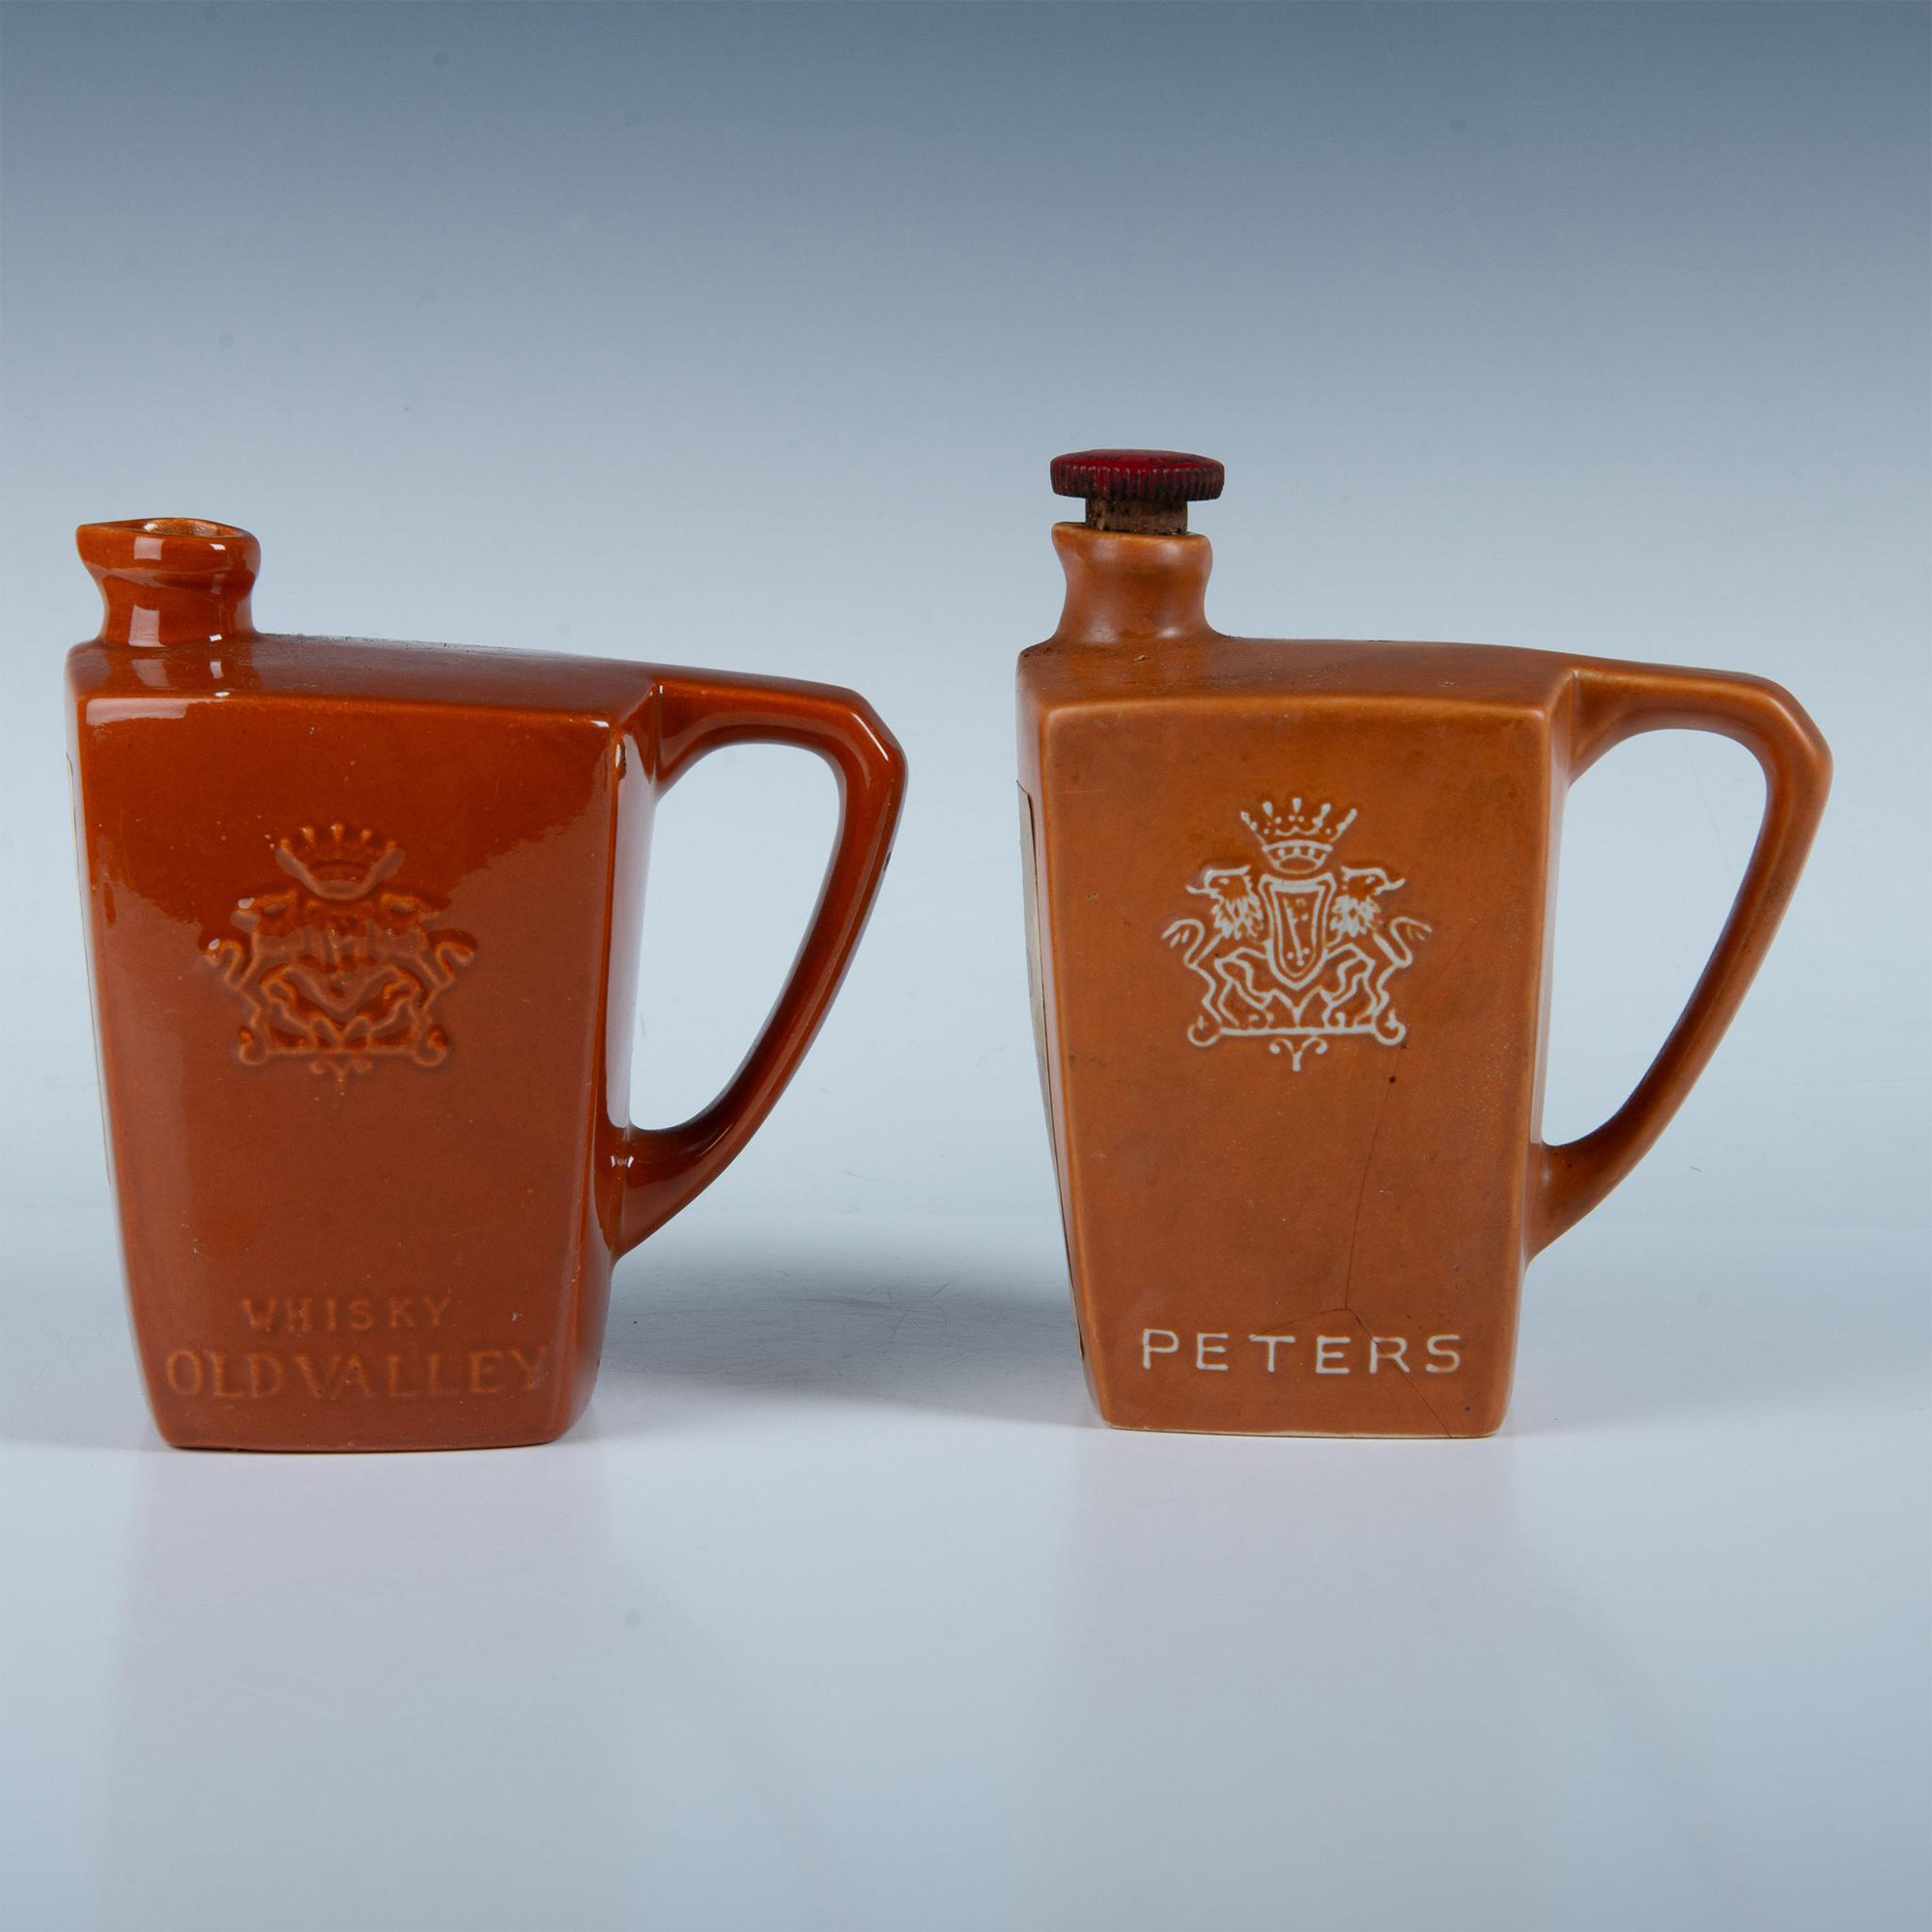 2pc Vintage Ceramic Peter's Old Valley Whisky Bottles - Image 2 of 6